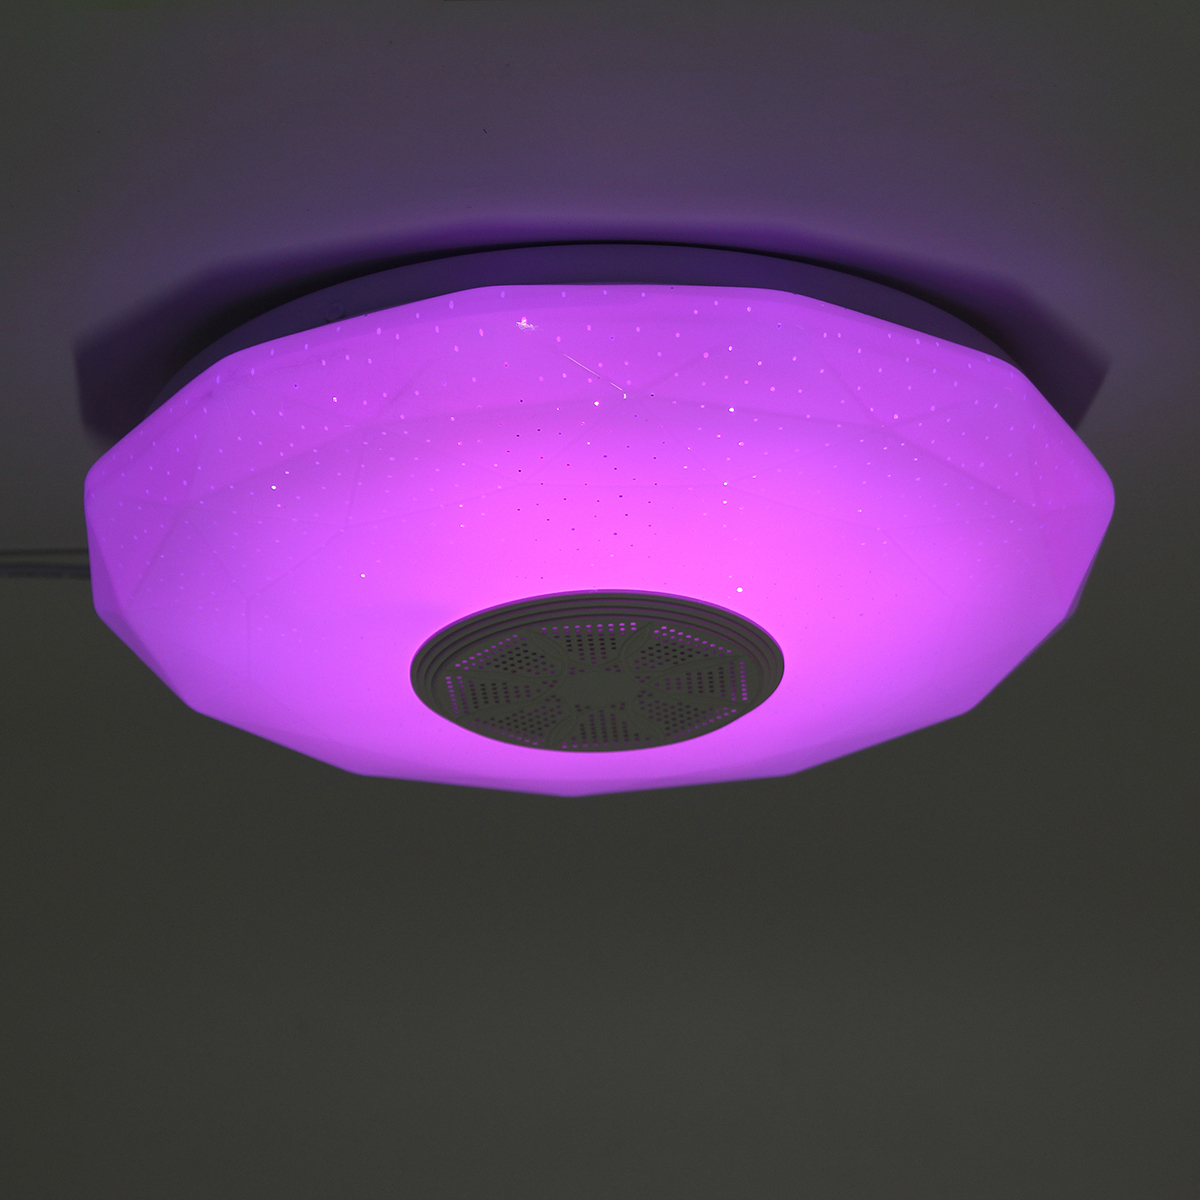 30cm-Diameter-Bluetooth-LED-Ceiling-Light-RGB-Music-Speaker-Dimmable-Lamp-Remote-Room-Diamond-Models-1723992-4